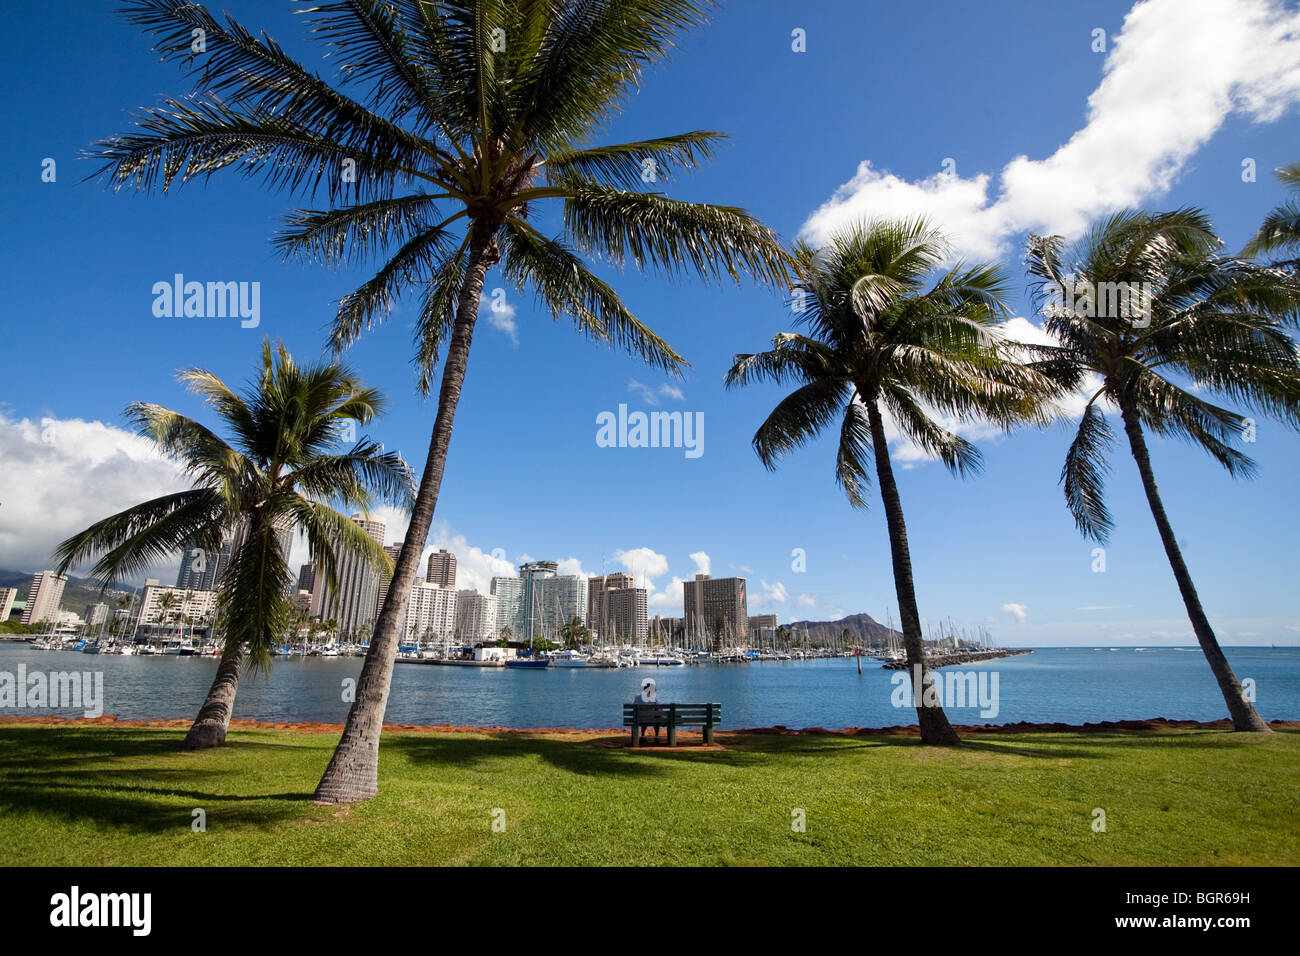 Alberi di palma e da una panchina nel parco di Ala Moana Park sull'isola di Oahu, Hawaii Foto Stock